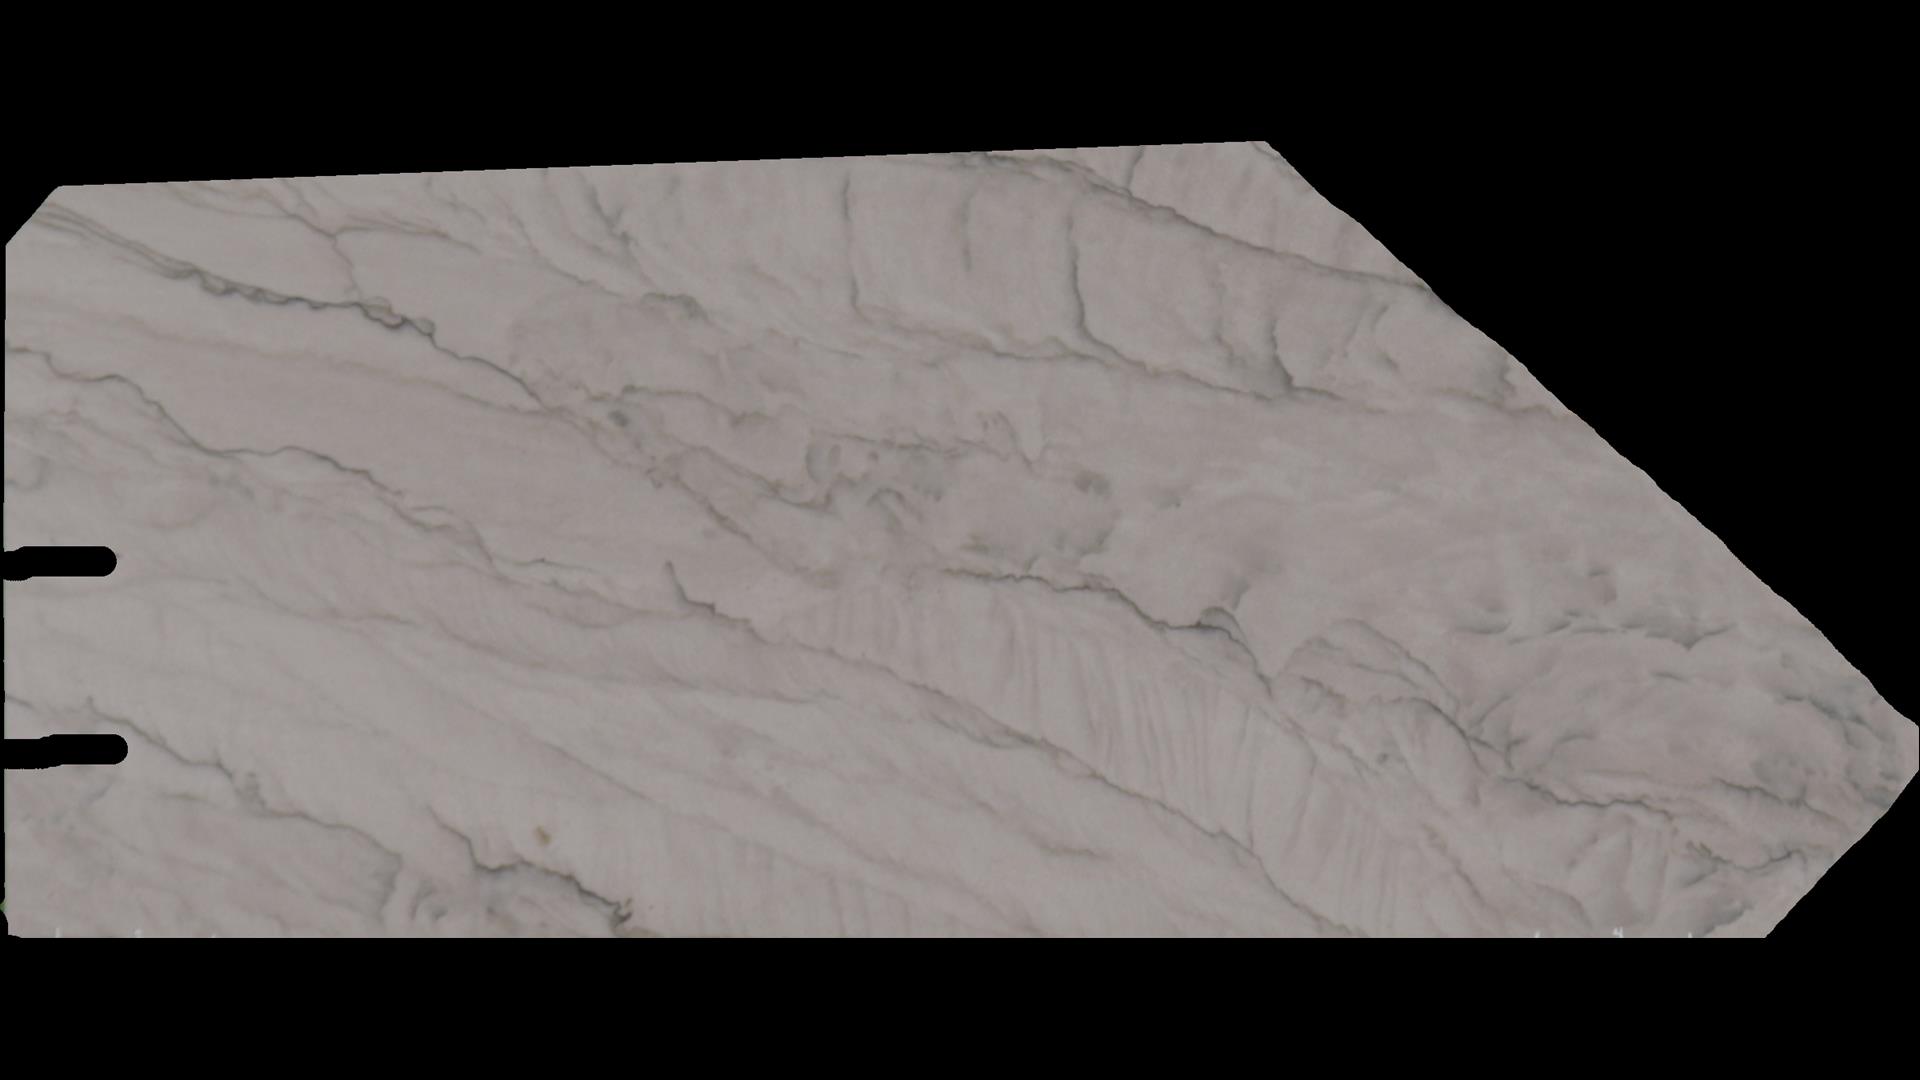 Mont Blanc Quartzite Slabs